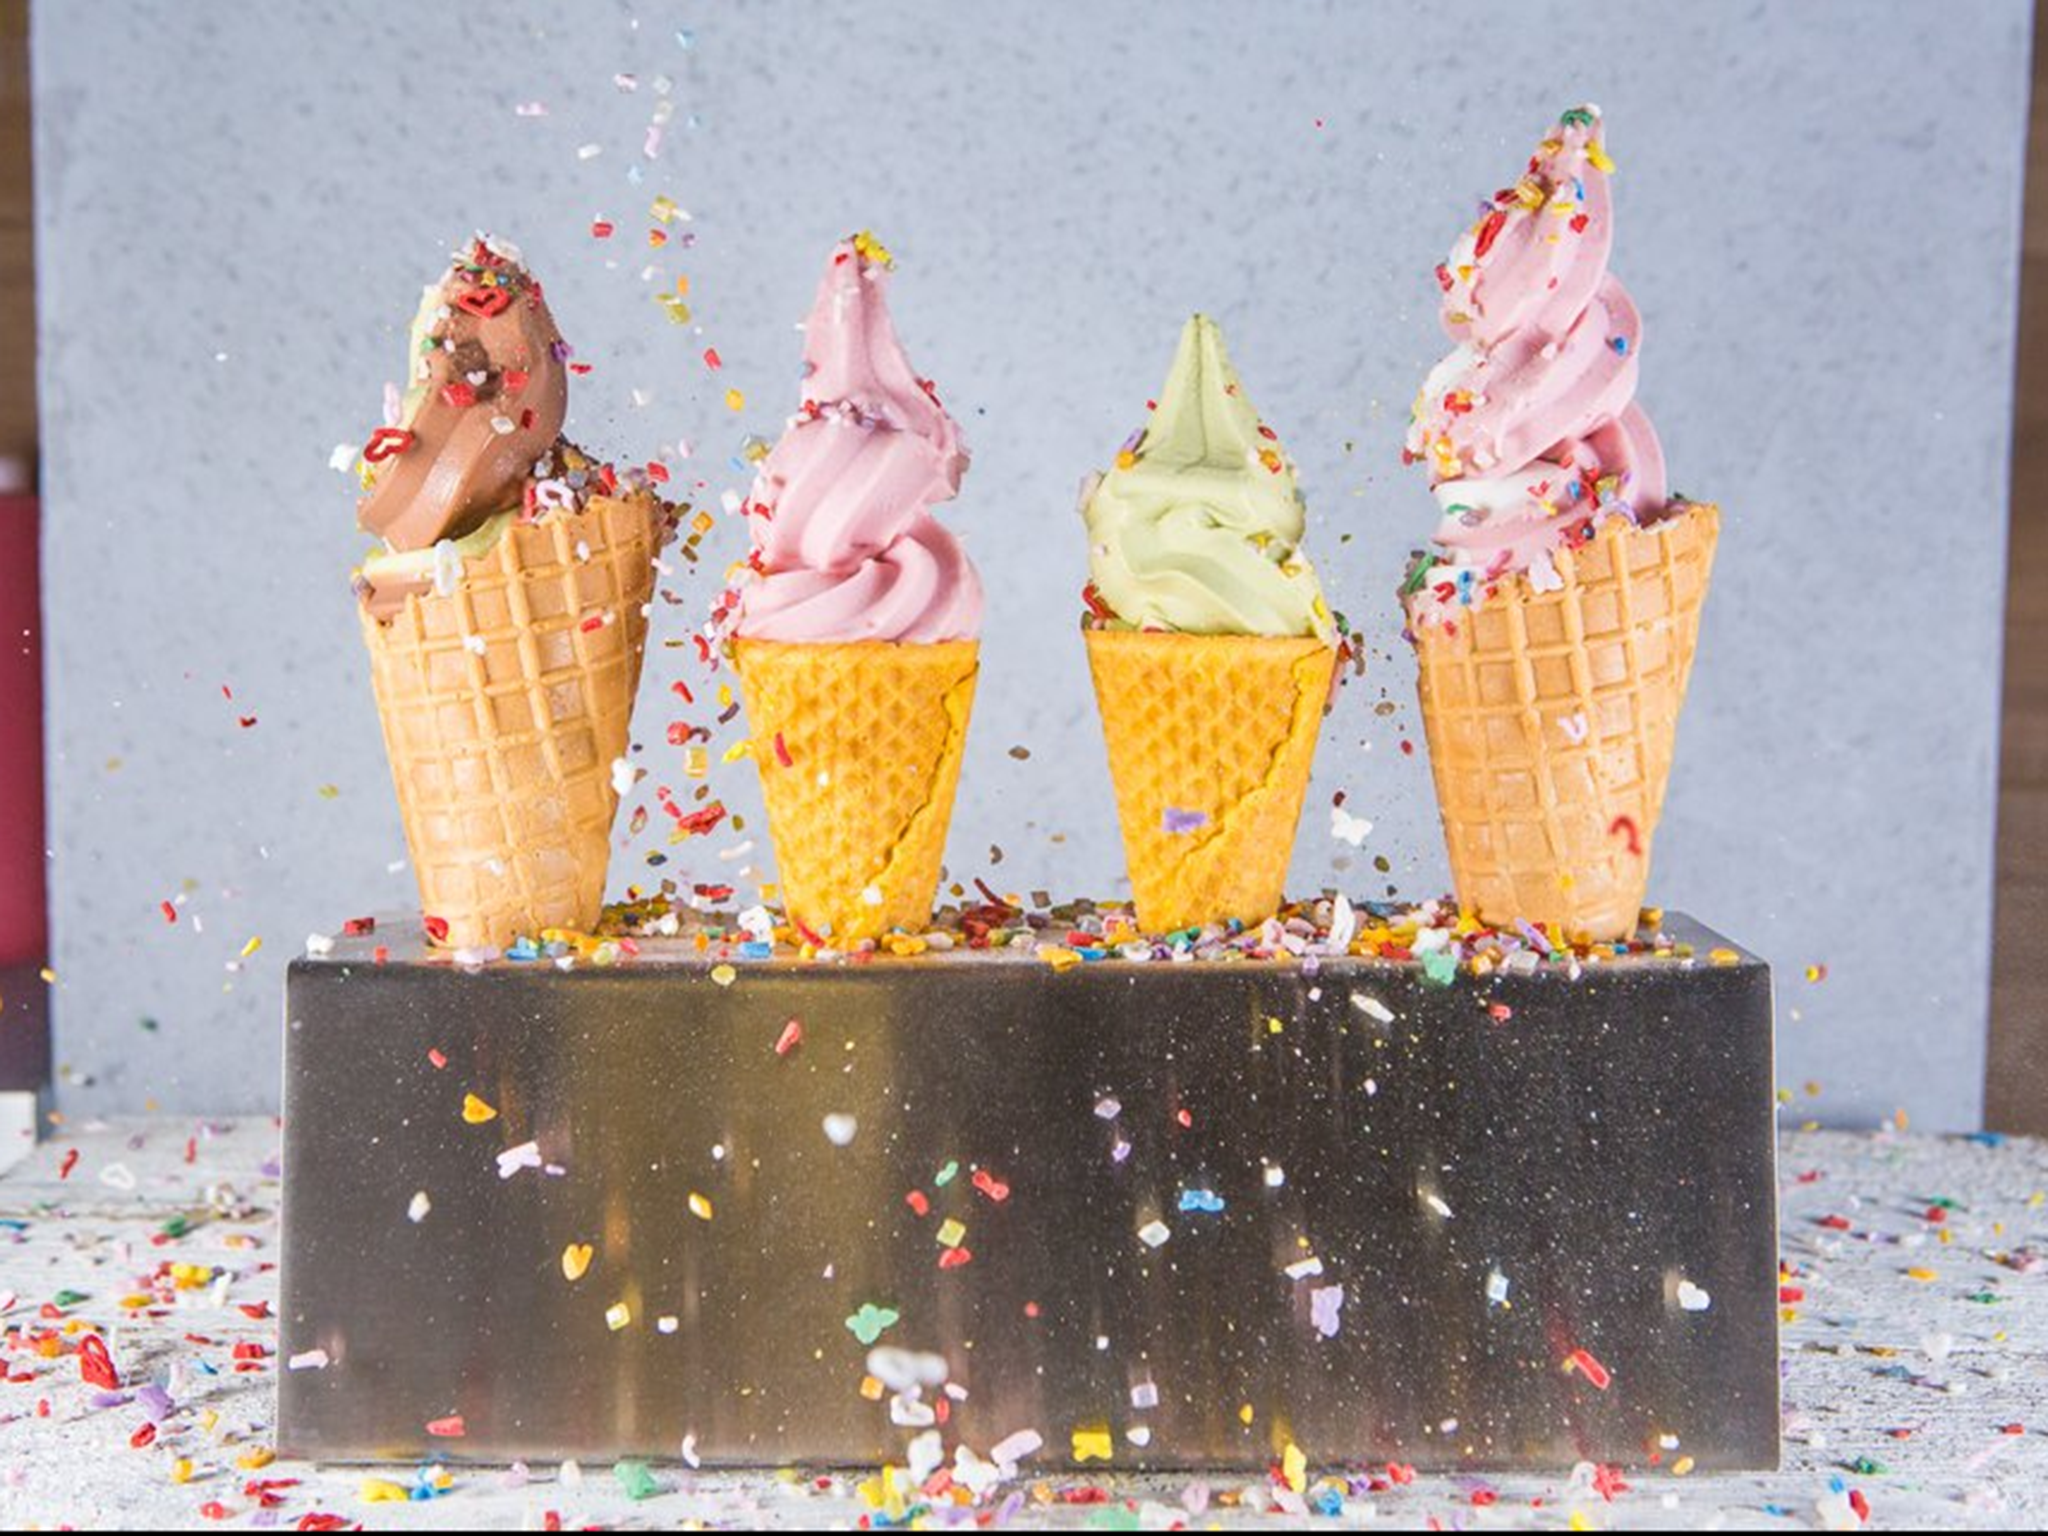 Dairy free ice cream in gluten free cones